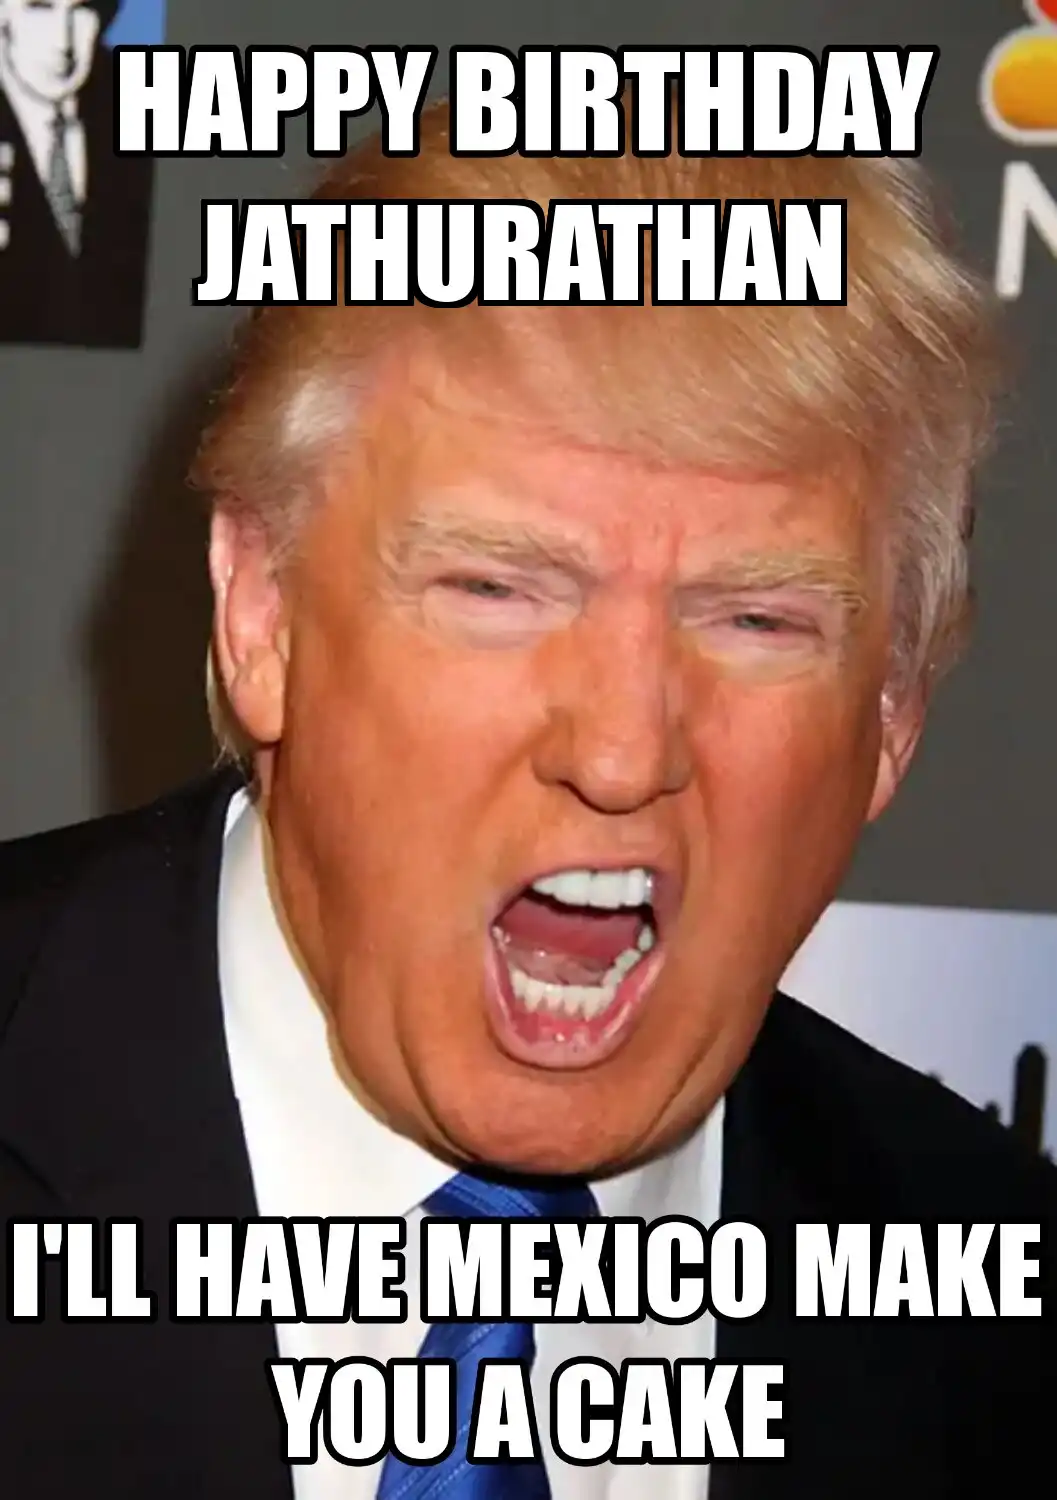 Happy Birthday Jathurathan Mexico Make You A Cake Meme